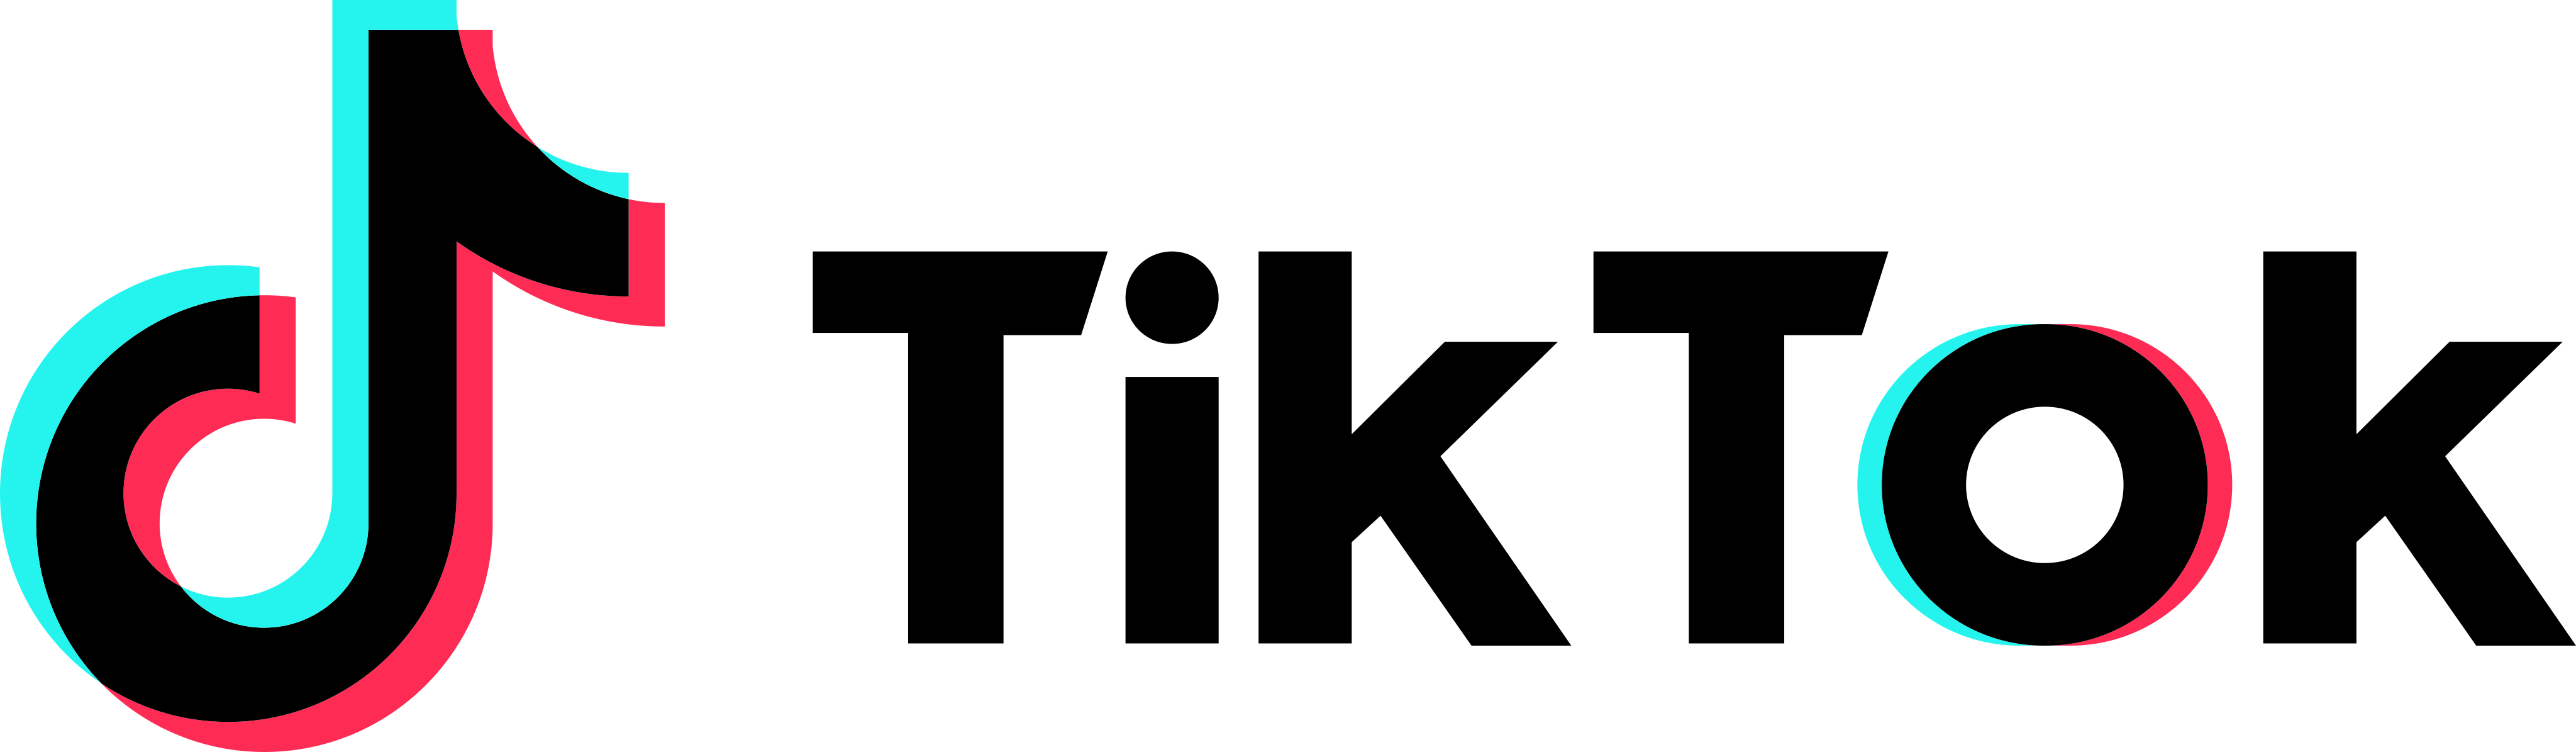 TikTok Logo PNG Background Image